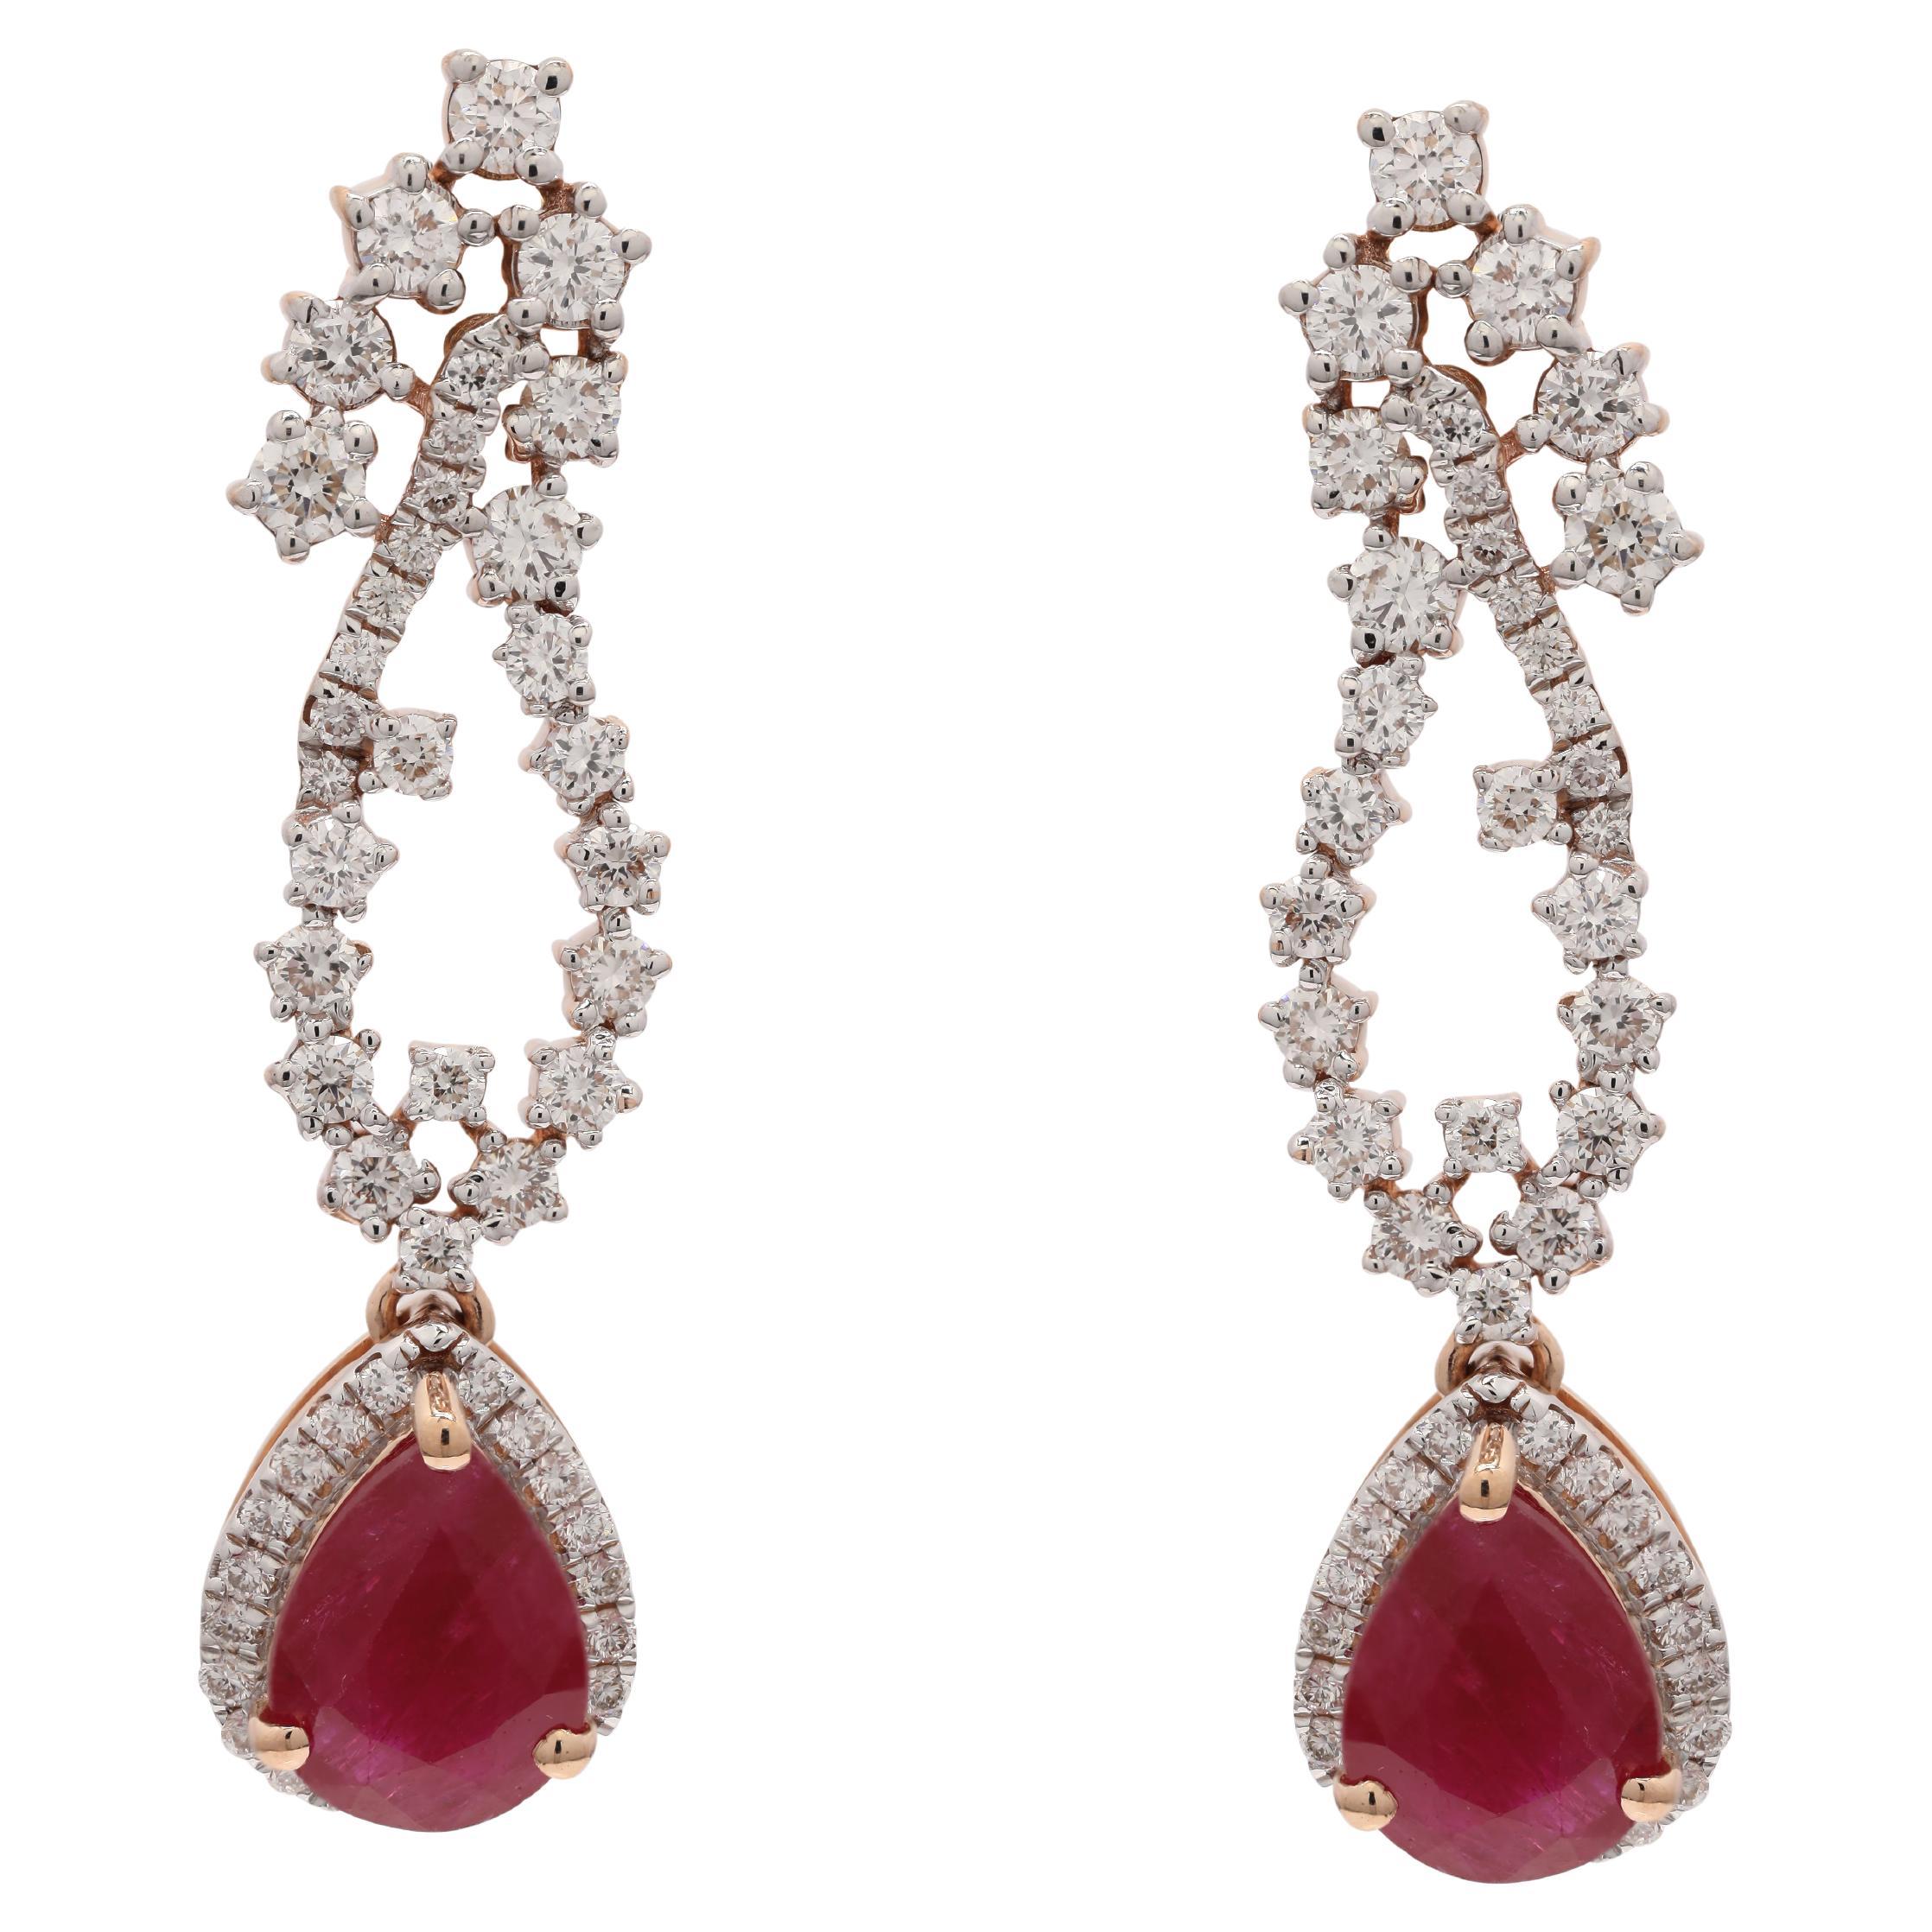 2.51 Carat Ruby Pear Drop Dangle Earrings in 14K Rose Gold with Diamonds